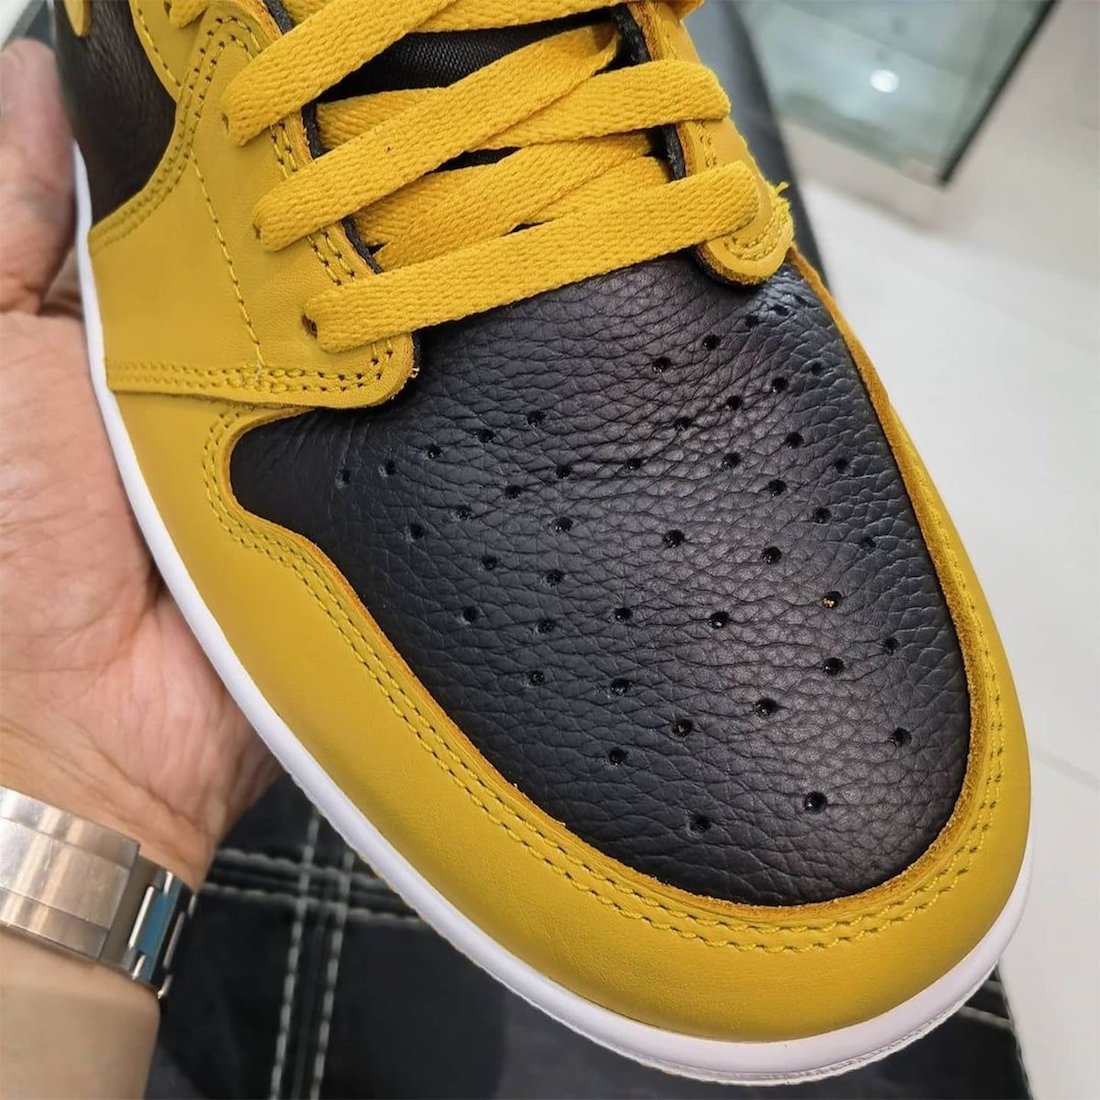 Jordan 2 Retro Homme Chaussures Pollen 555088-701 Release Date Pricing